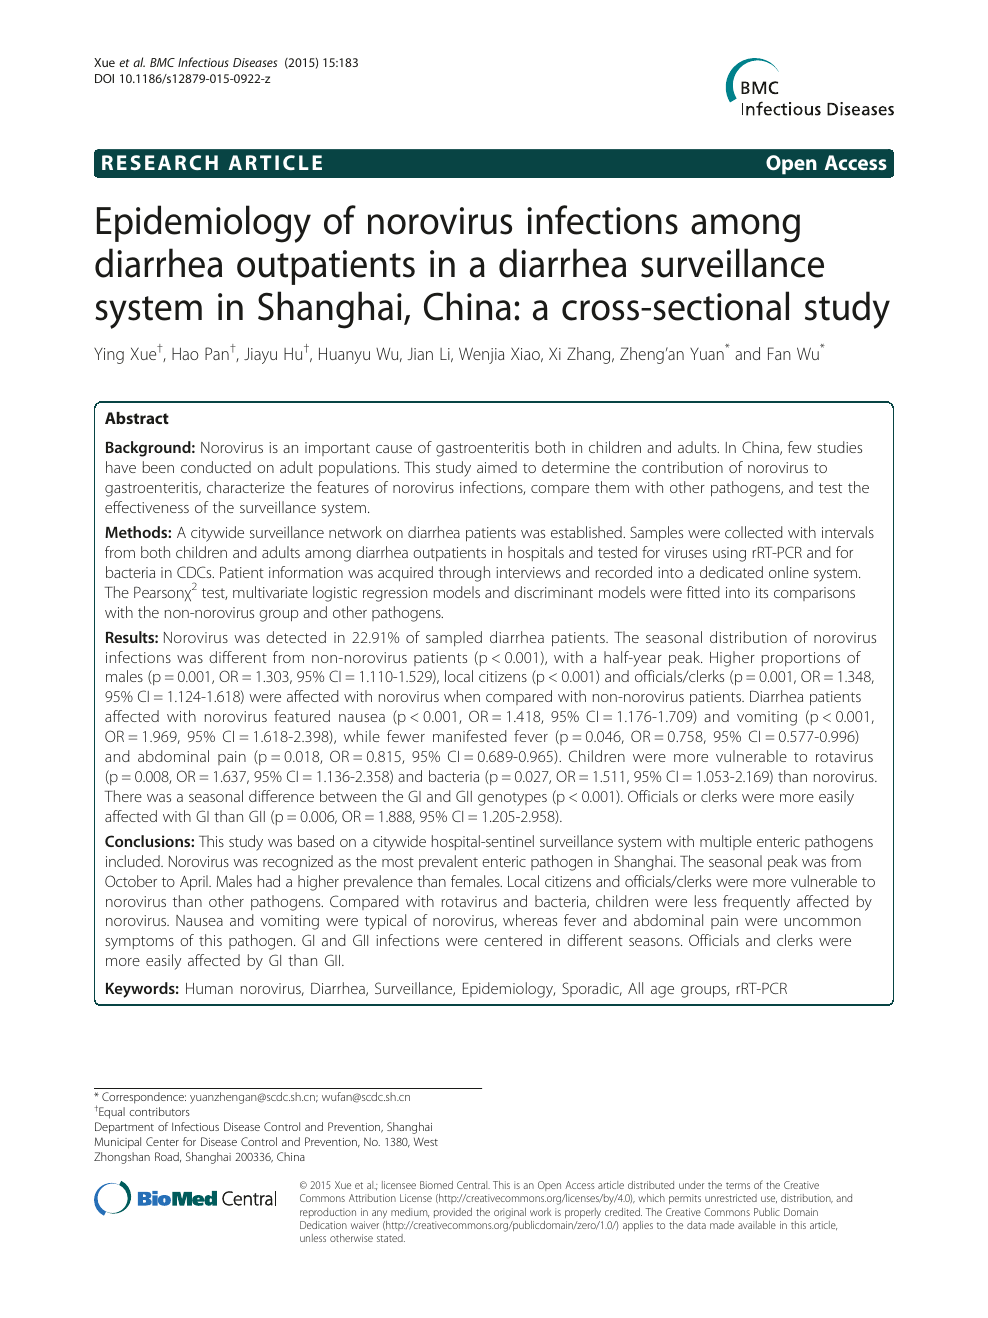 Epidemiology Of Norovirus Infections Among Diarrhea - 